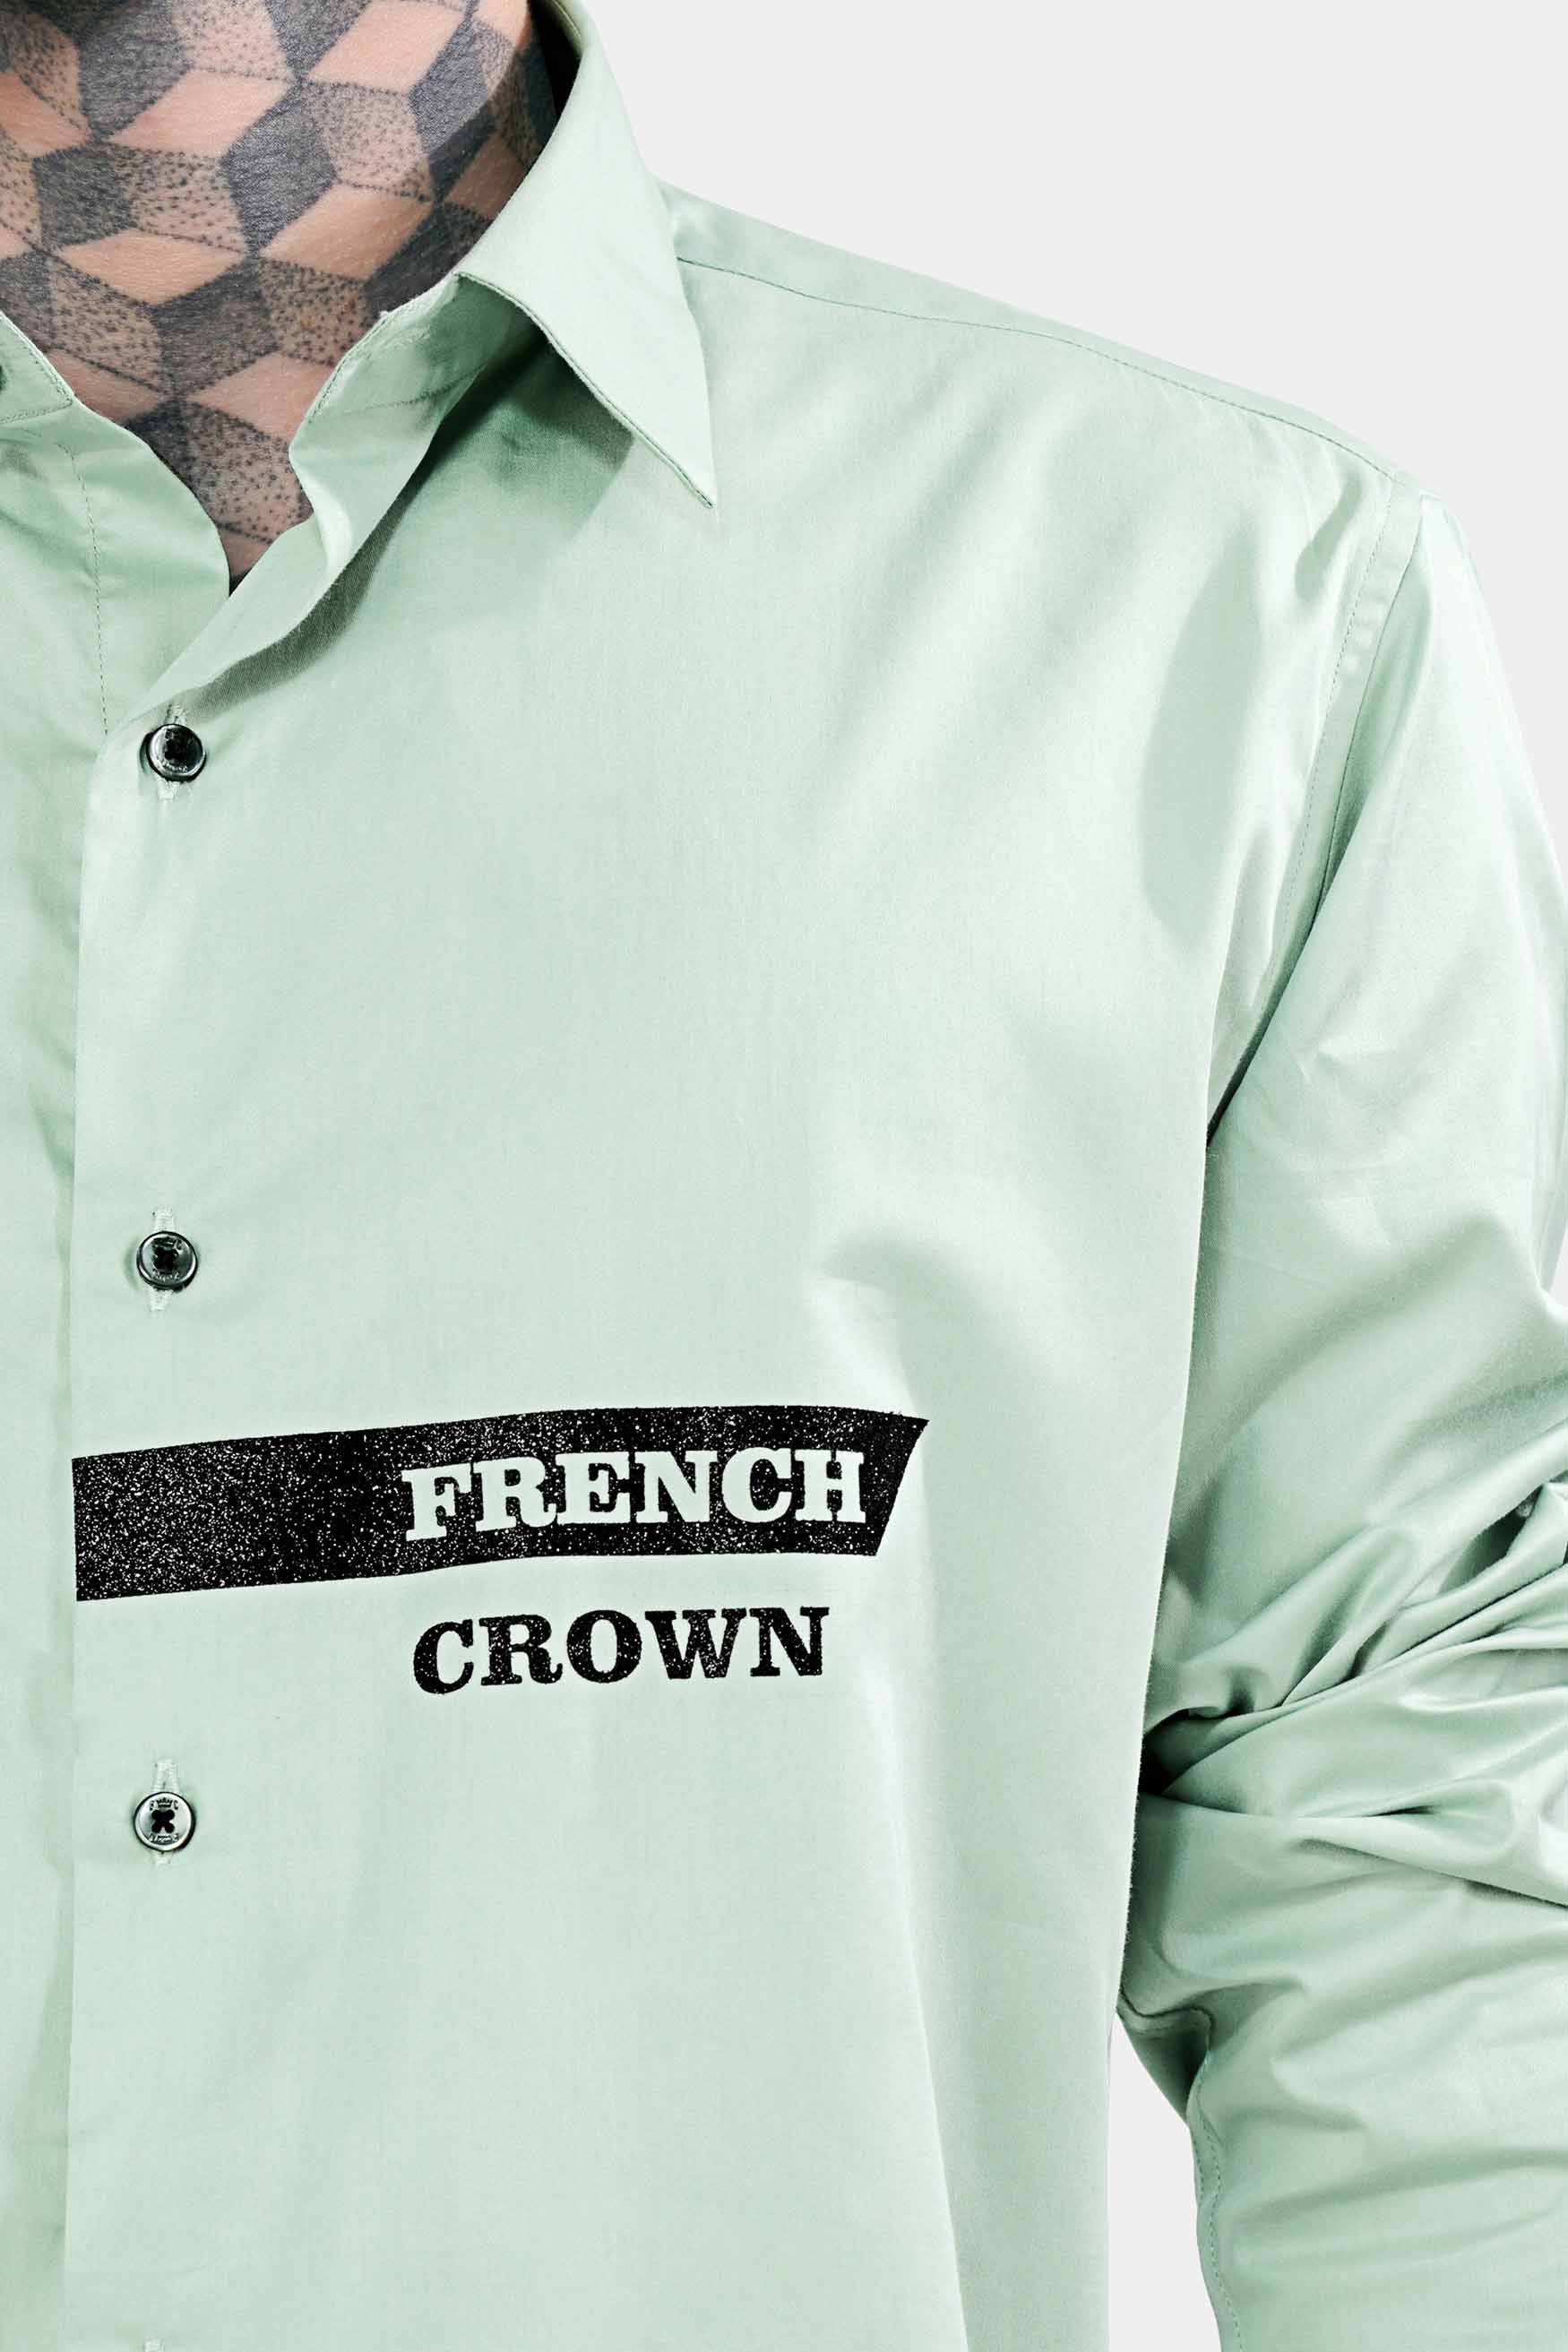 Sprout Green French Crown Foil Printed Subtle Sheen Super Soft Premium Cotton Designer Shirt 11425-BLK-RPRT107-38, 11425-BLK-RPRT107-H-38, 11425-BLK-RPRT107-39, 11425-BLK-RPRT107-H-39, 11425-BLK-RPRT107-40, 11425-BLK-RPRT107-H-40, 11425-BLK-RPRT107-42, 11425-BLK-RPRT107-H-42, 11425-BLK-RPRT107-44, 11425-BLK-RPRT107-H-44, 11425-BLK-RPRT107-46, 11425-BLK-RPRT107-H-46, 11425-BLK-RPRT107-48, 11425-BLK-RPRT107-H-48, 11425-BLK-RPRT107-50, 11425-BLK-RPRT107-H-50, 11425-BLK-RPRT107-52, 11425-BLK-RPRT107-H-52